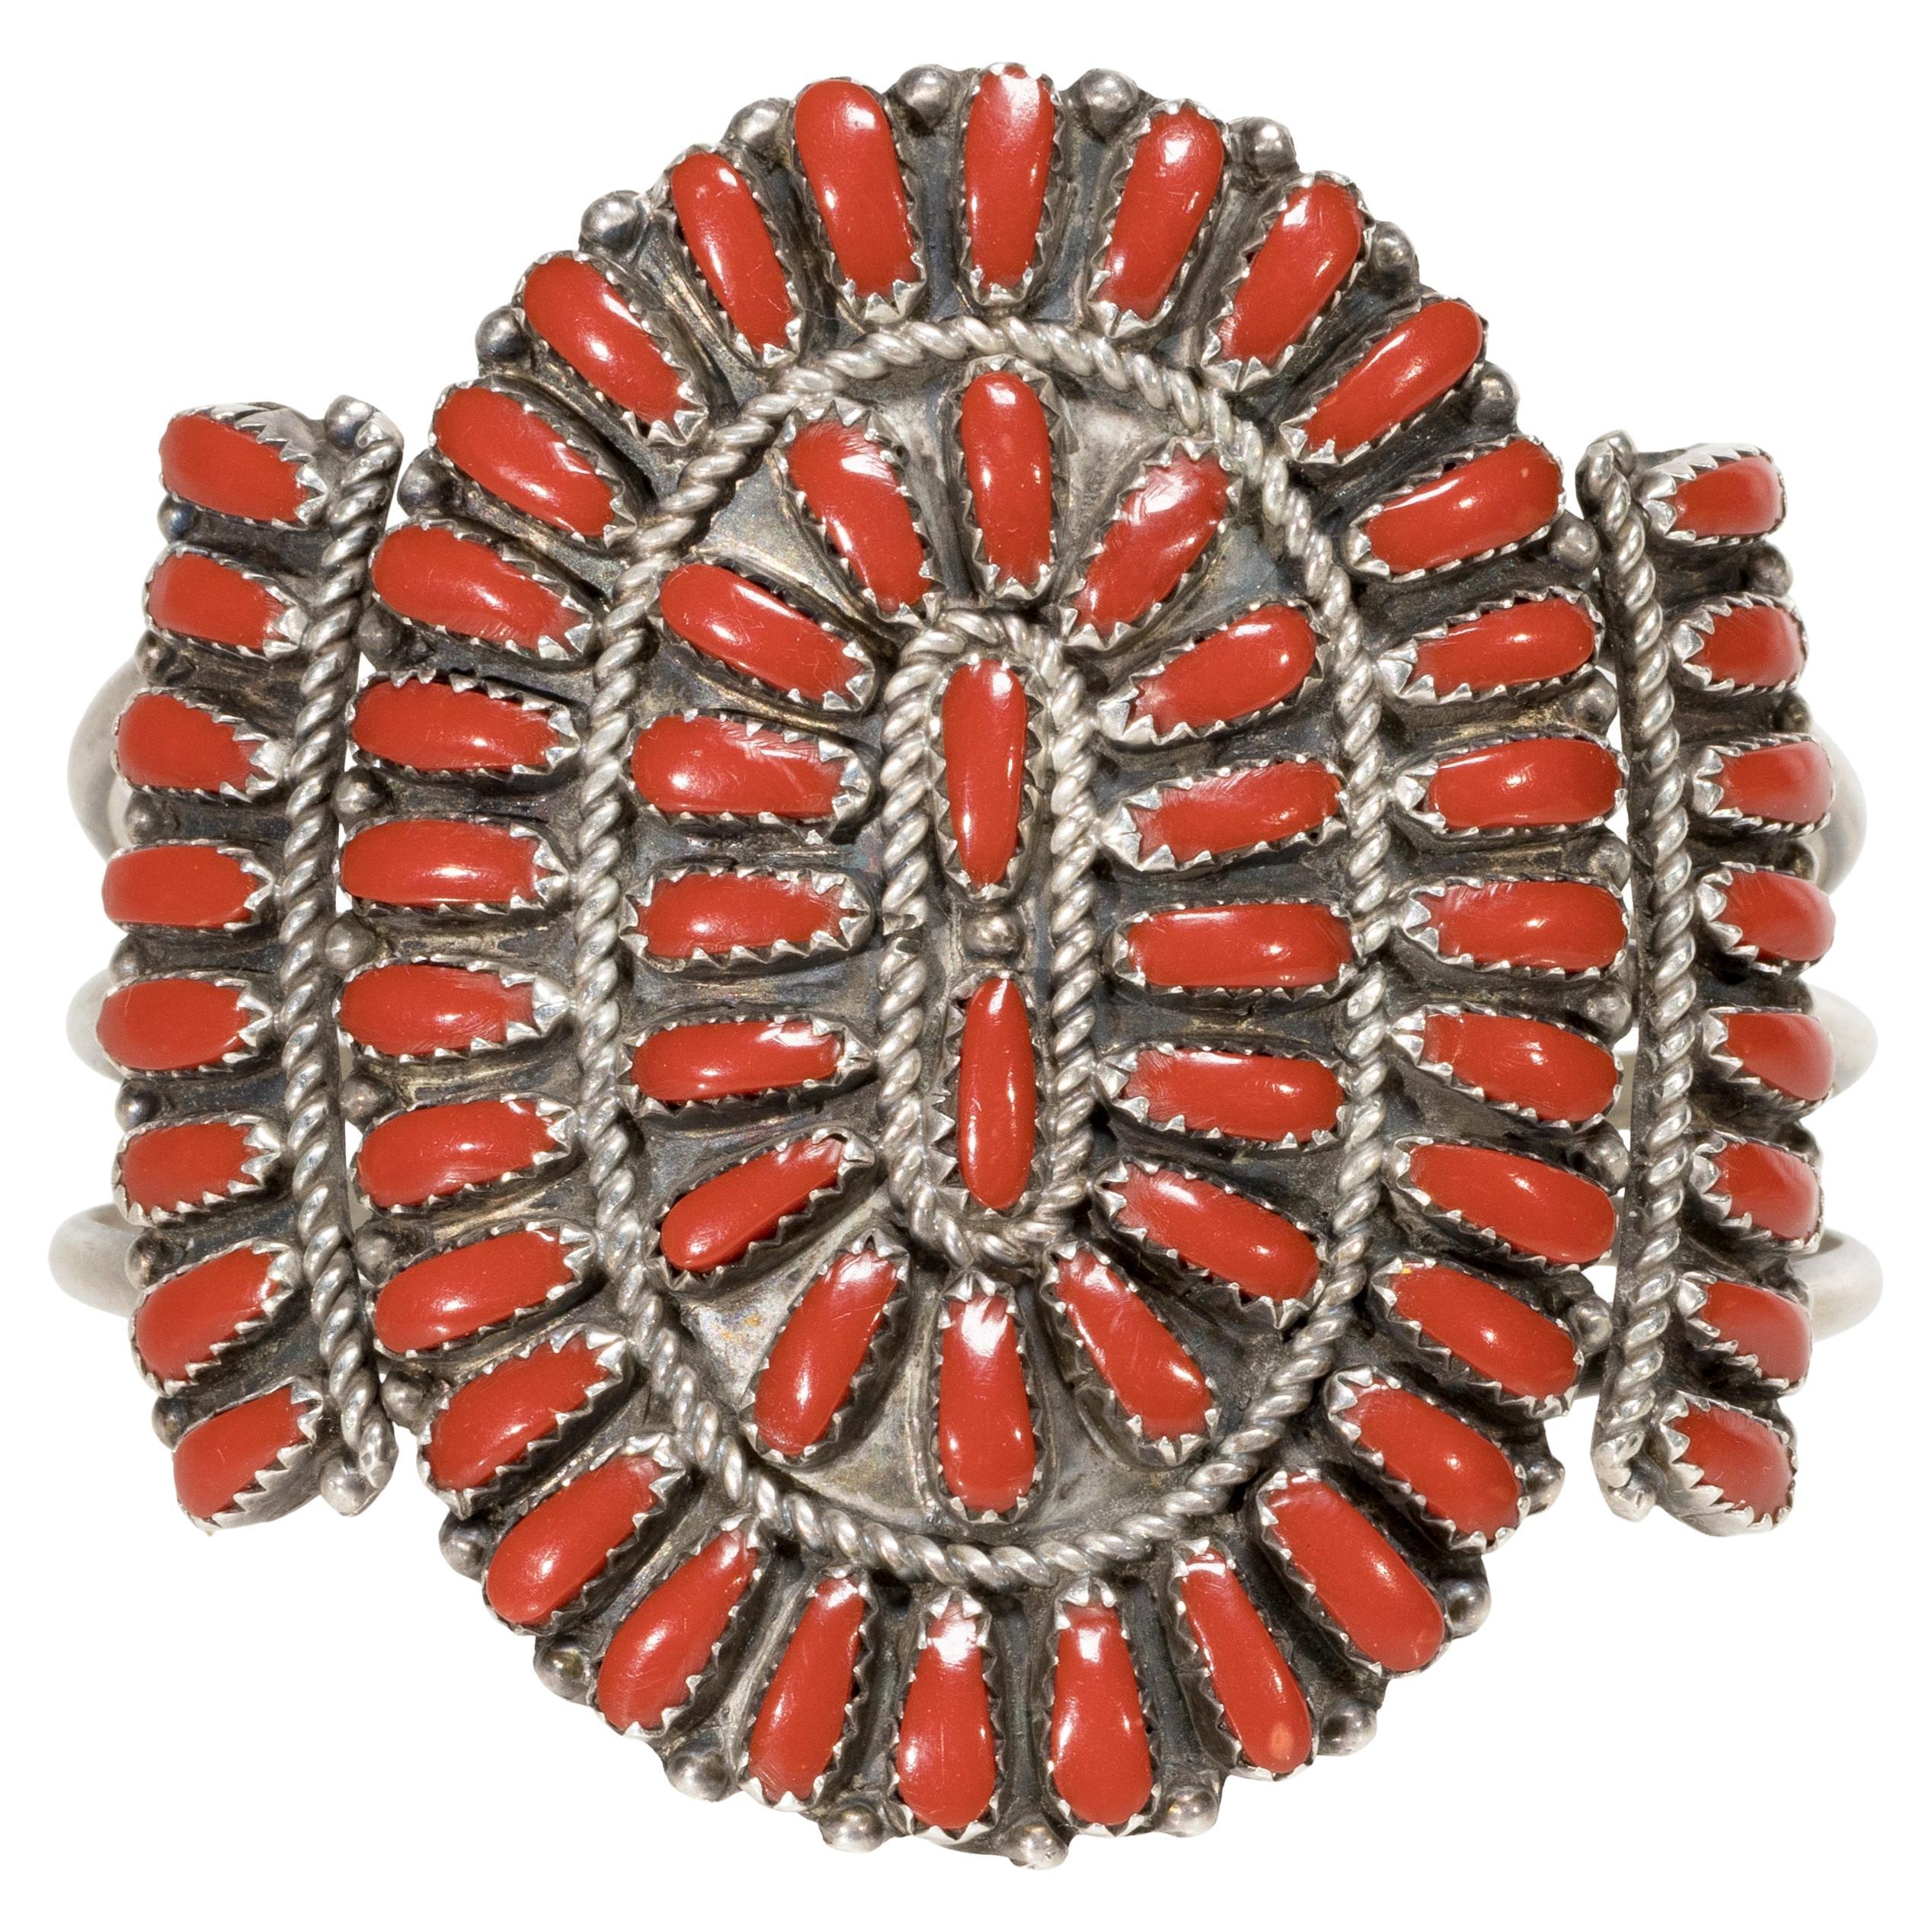 Zuni Coral and Sterling Bracelet